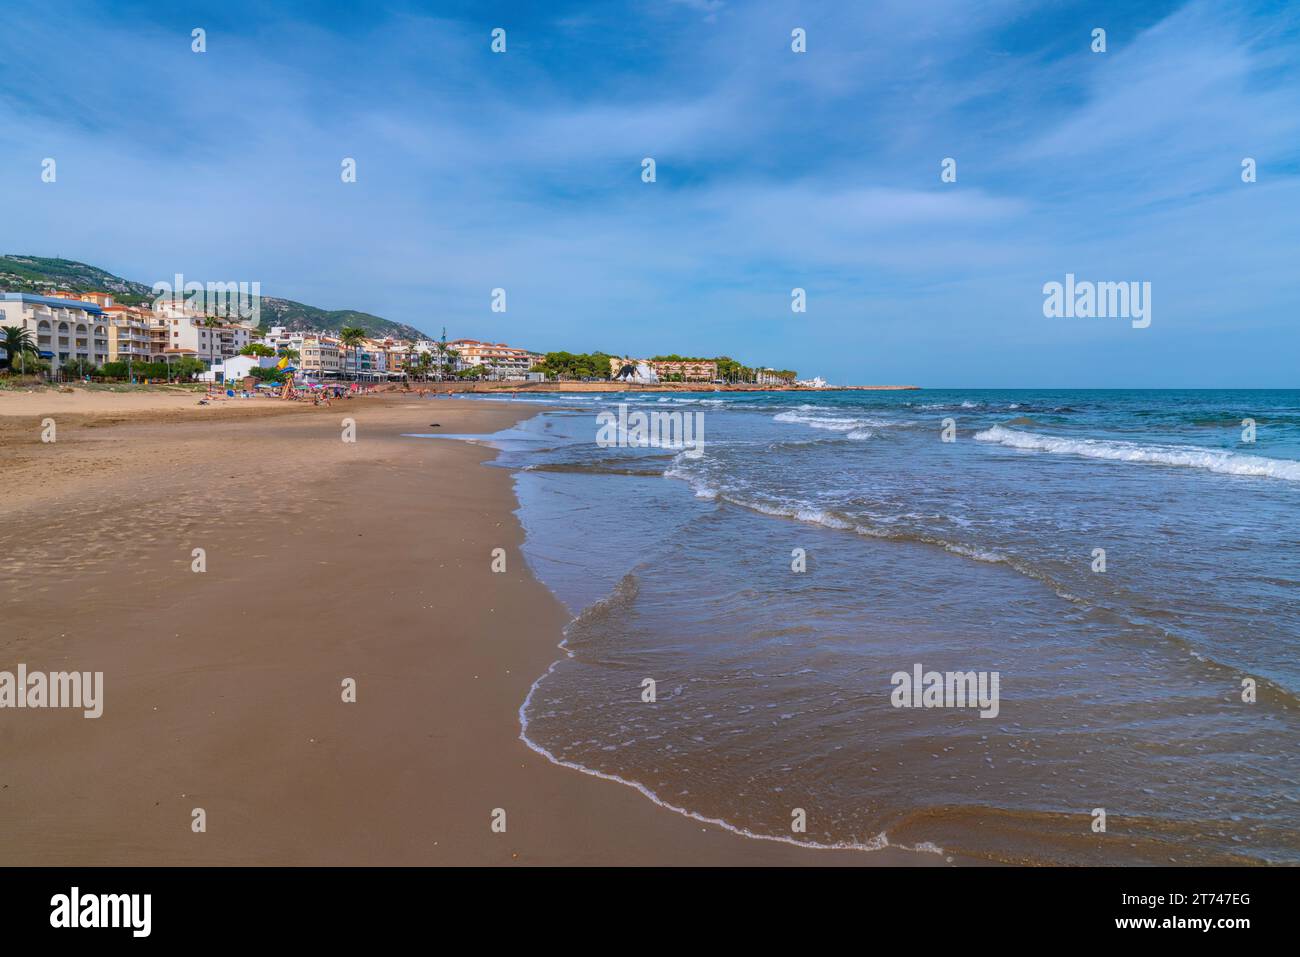 Alcossebre Spain beach on Costa del Azahar Mediterranean coast Stock Photo